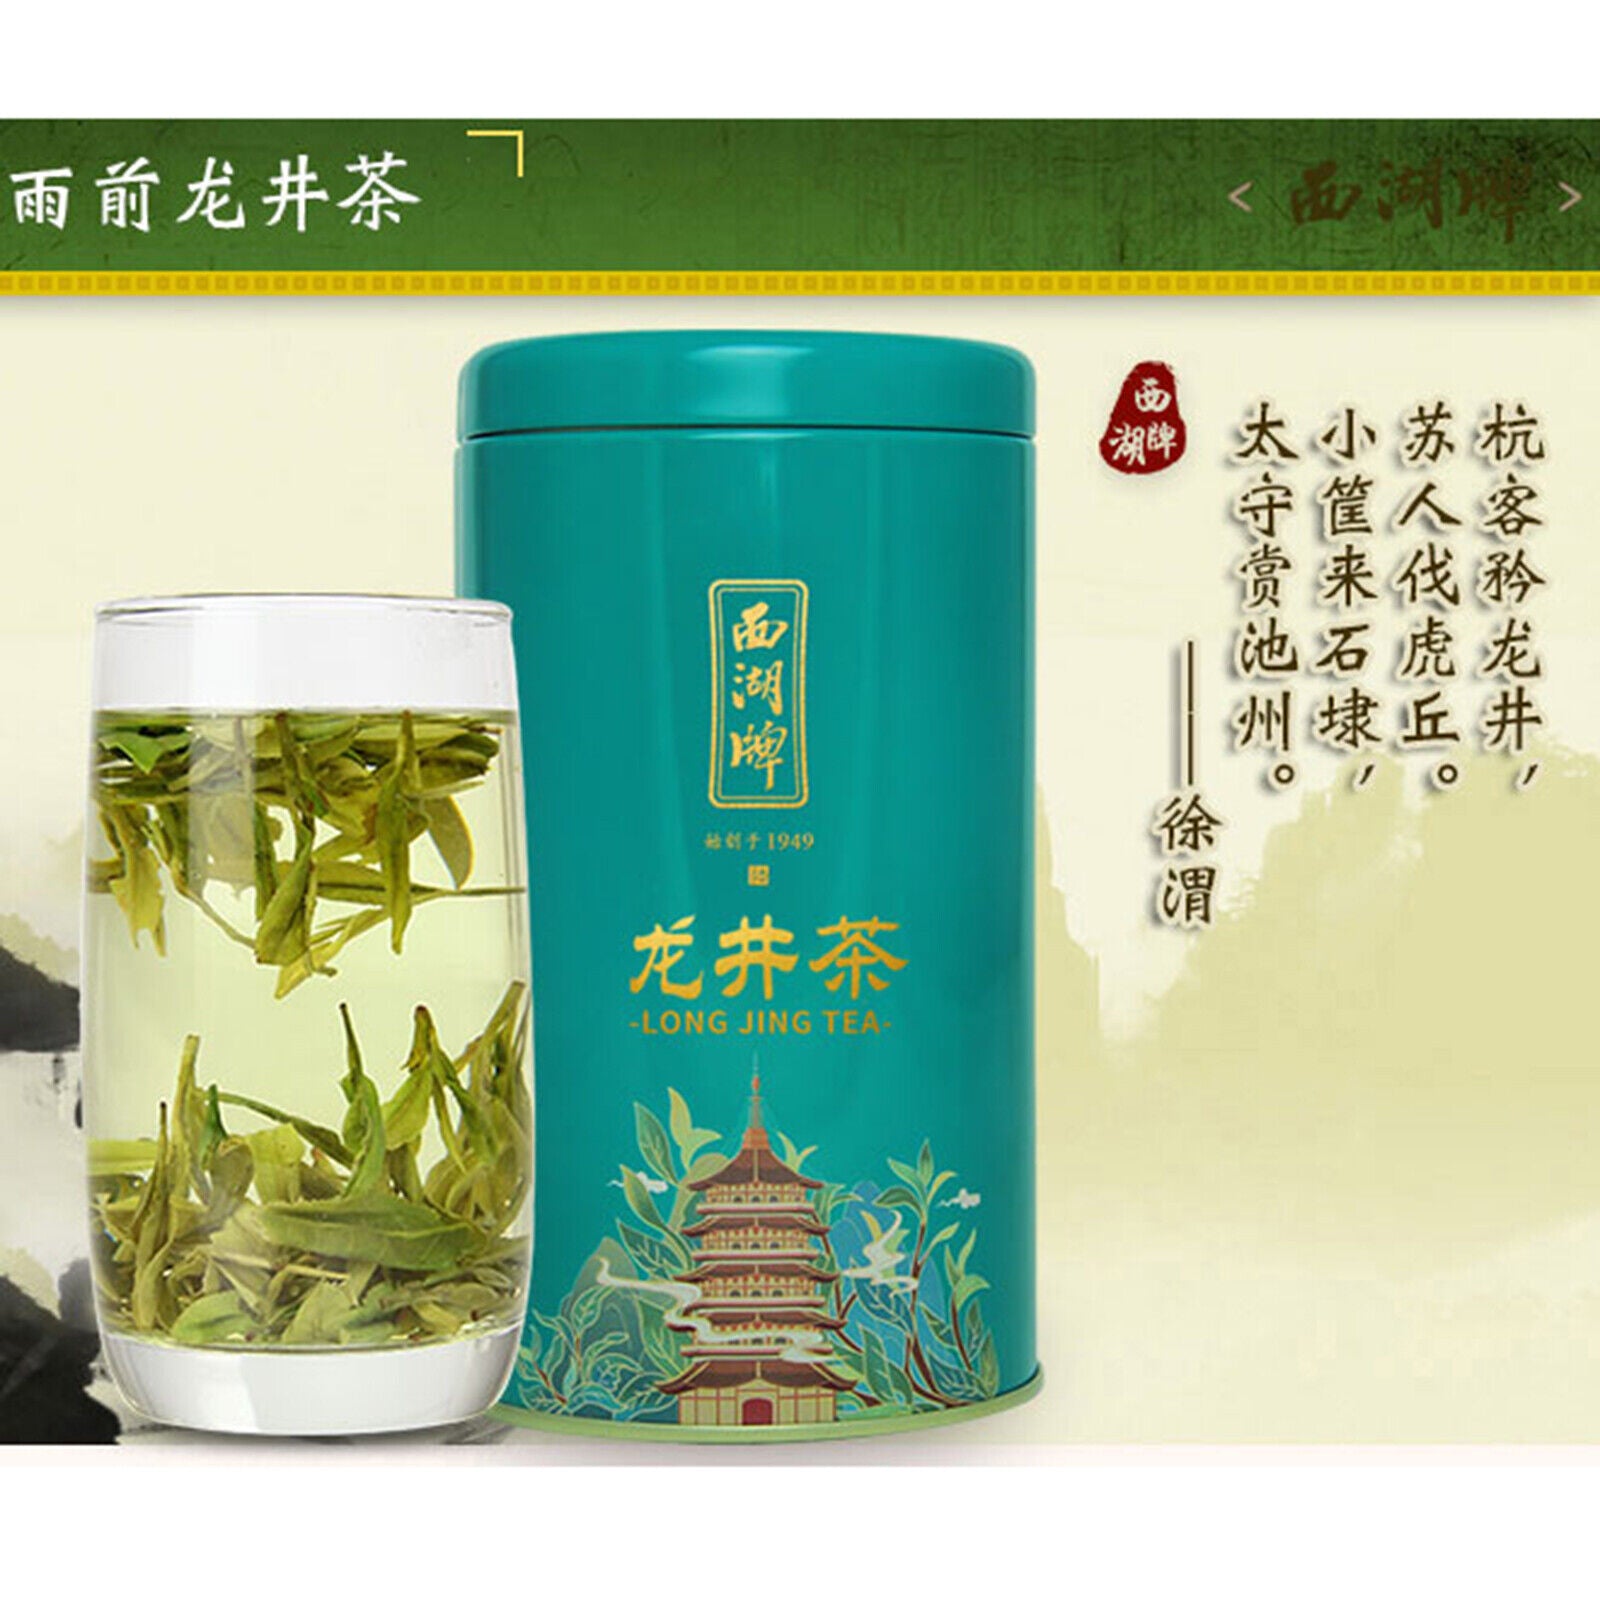 West Lake Longjing Tea Before The Rain Green Fragrant Tea 西湖牌 龙井茶叶 雨前浓香新茶100g